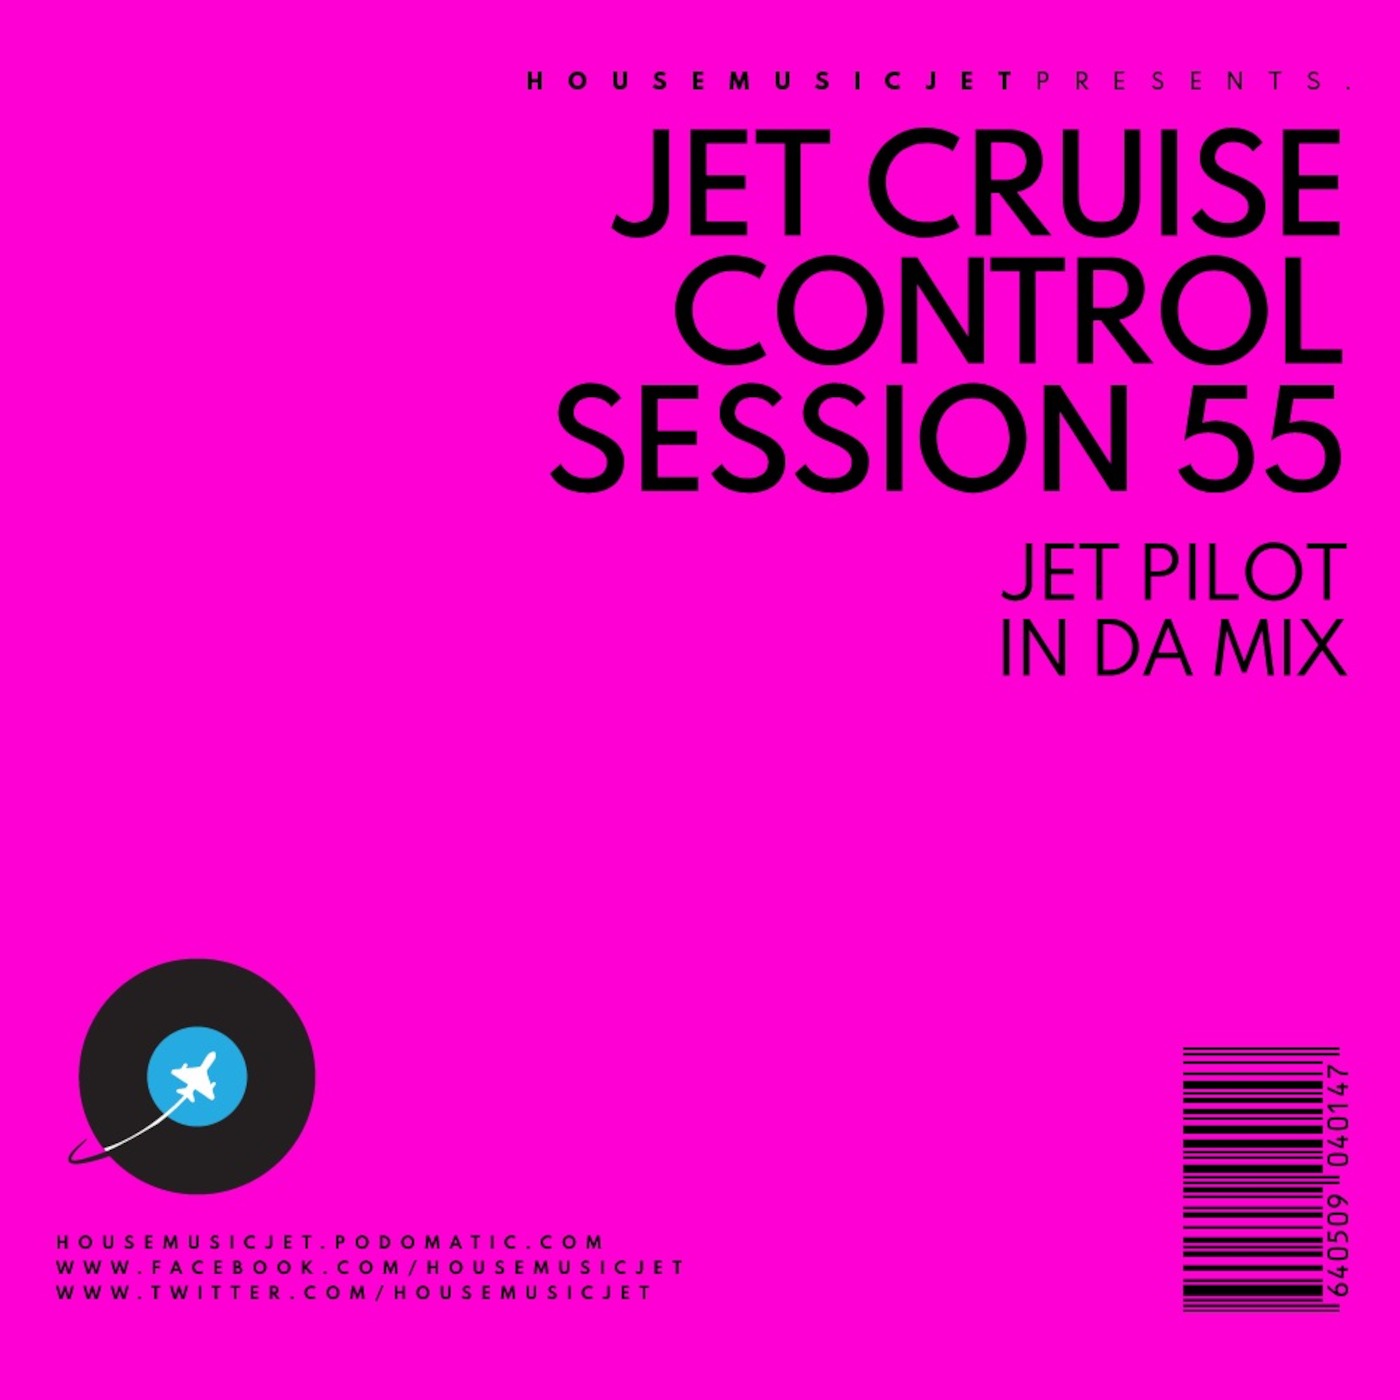 Jet Pilot In Da Mix – Jet Cruise Control Session 55